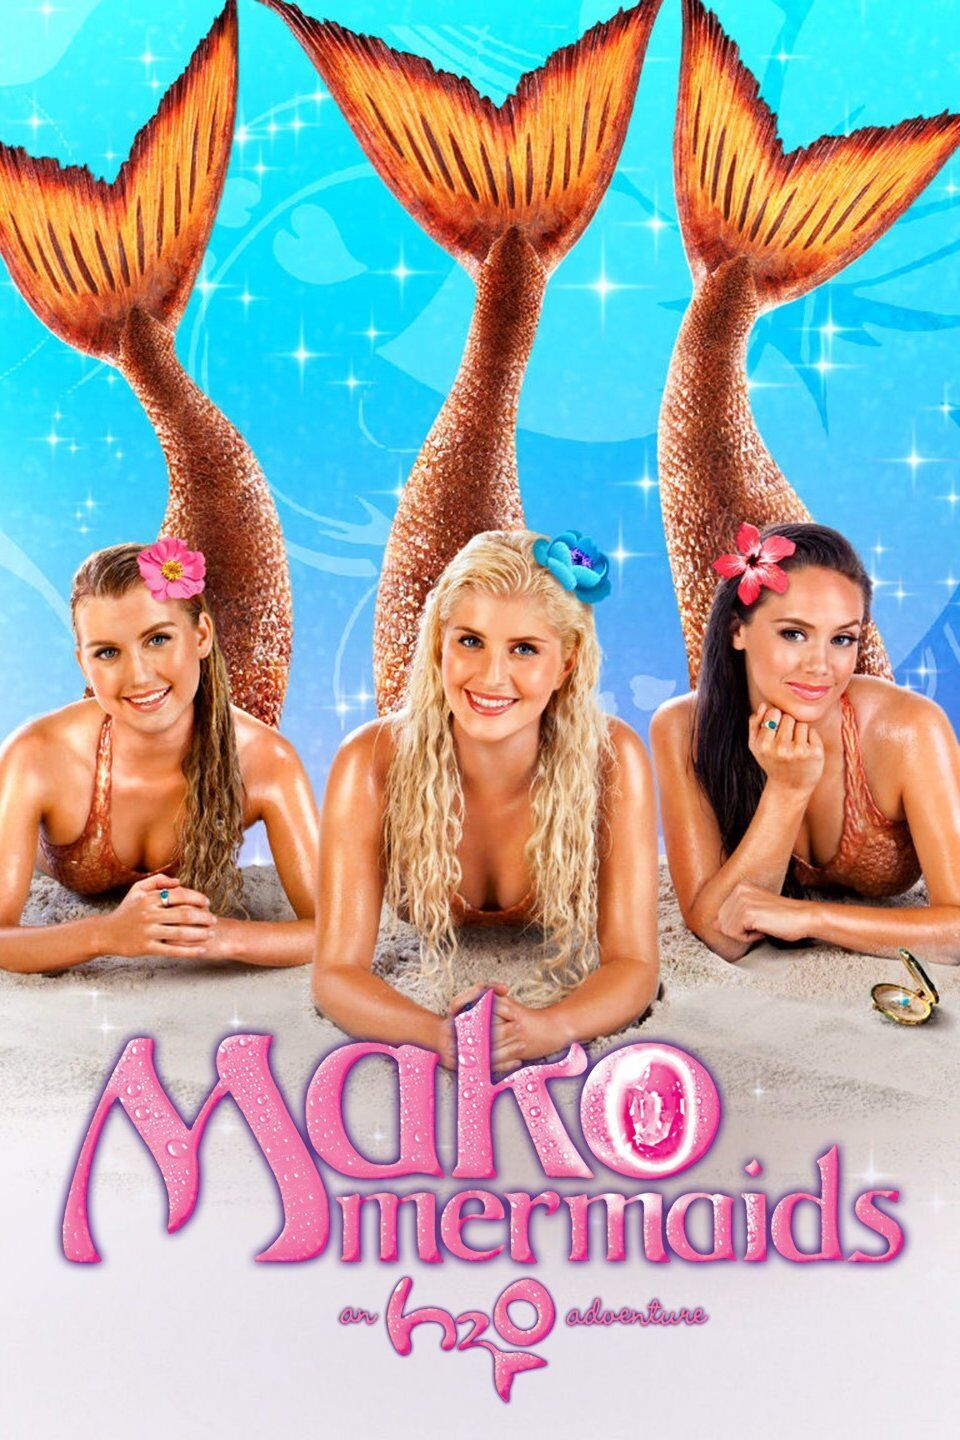  Mako Mermaids - An H2O Adventure Season 1, Vol. 1